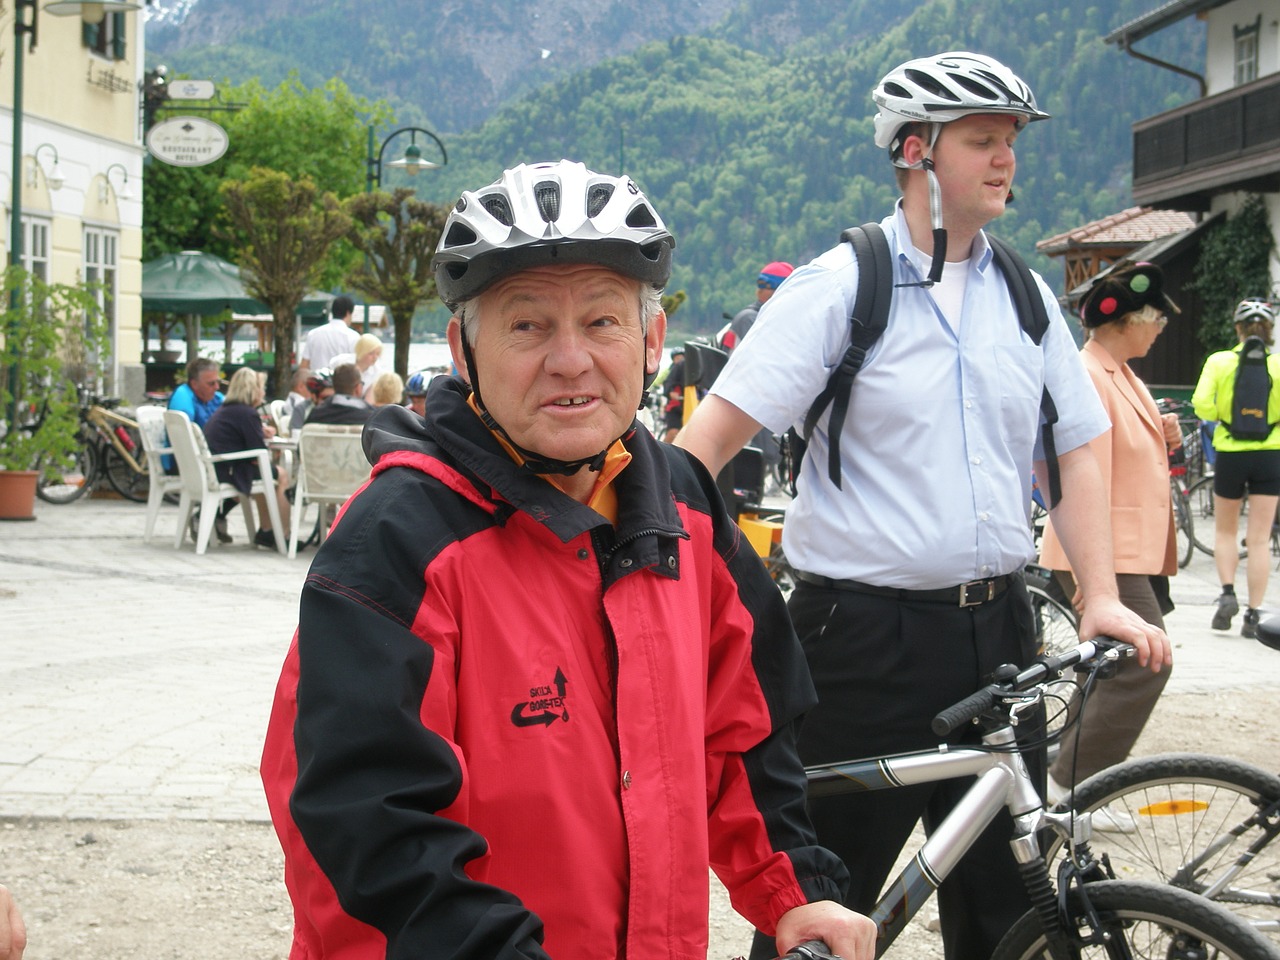 biking sunday governor pühringer prominent free photo